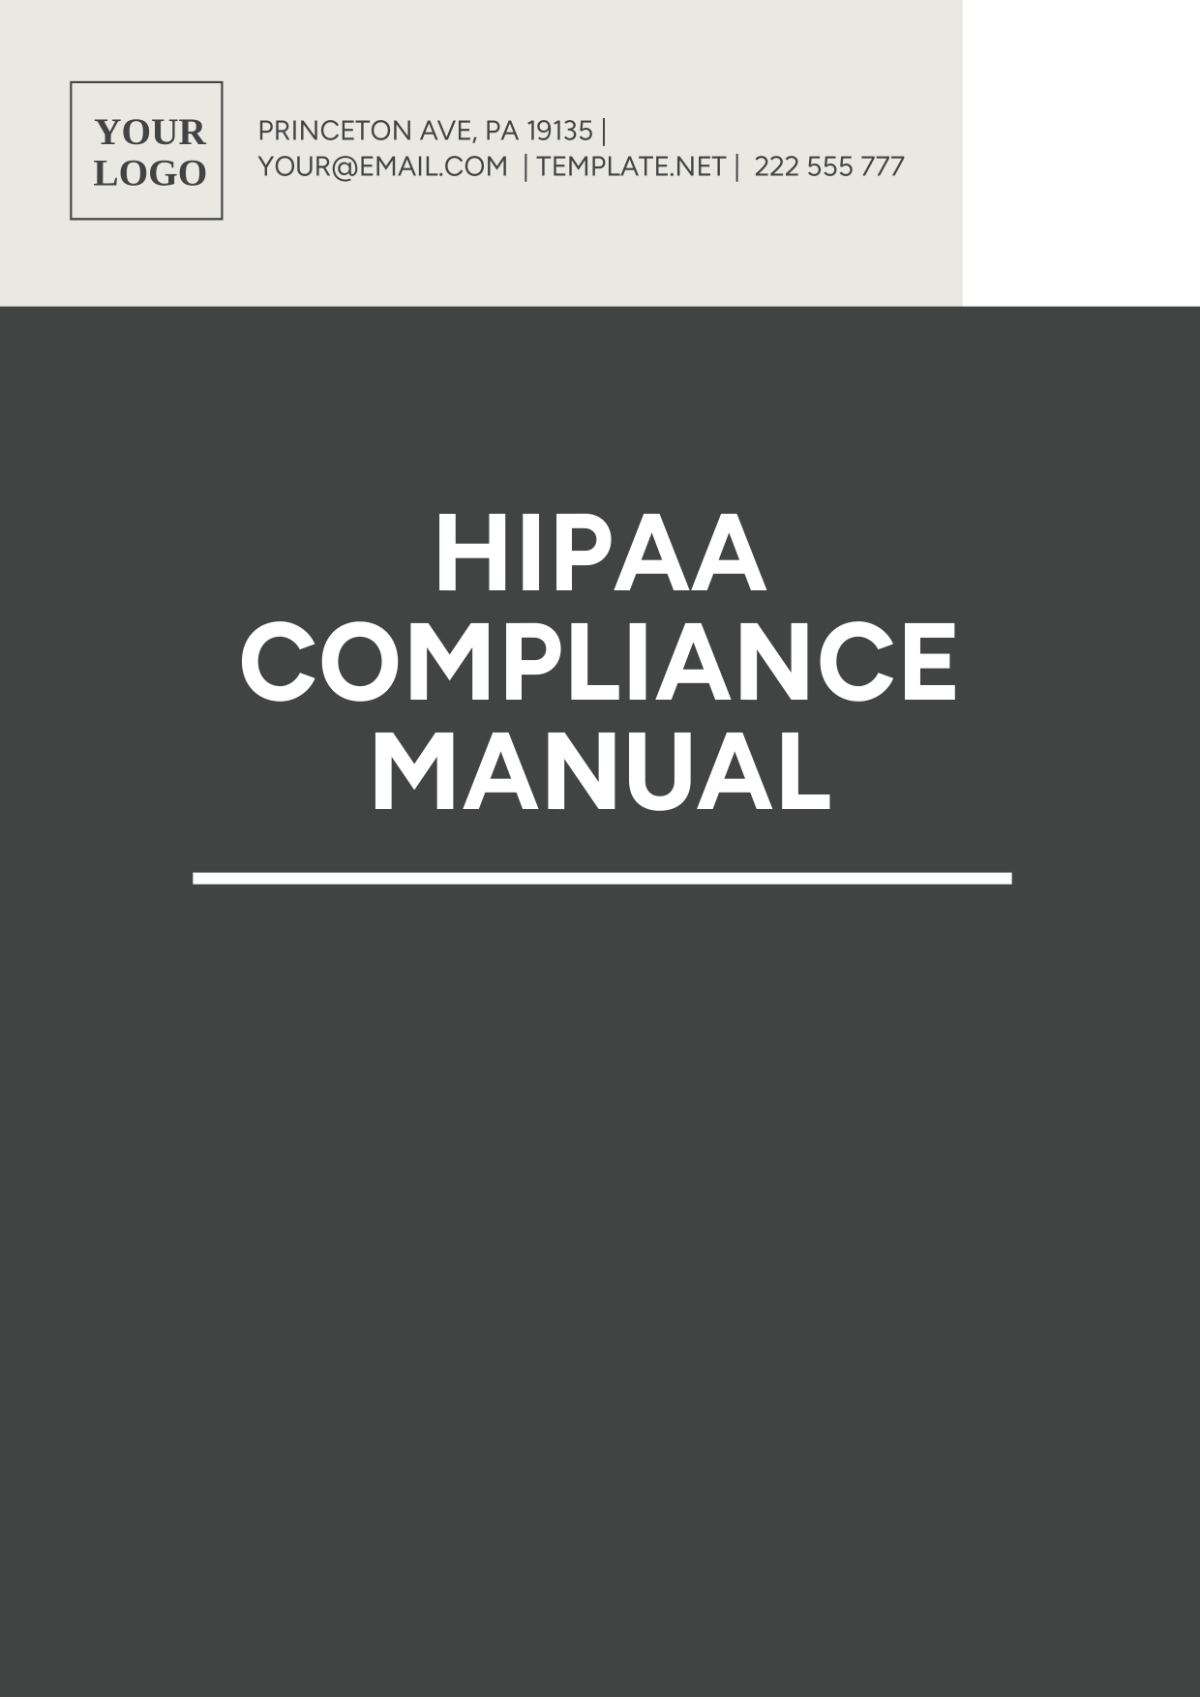 Hipaa Compliance Manual Template